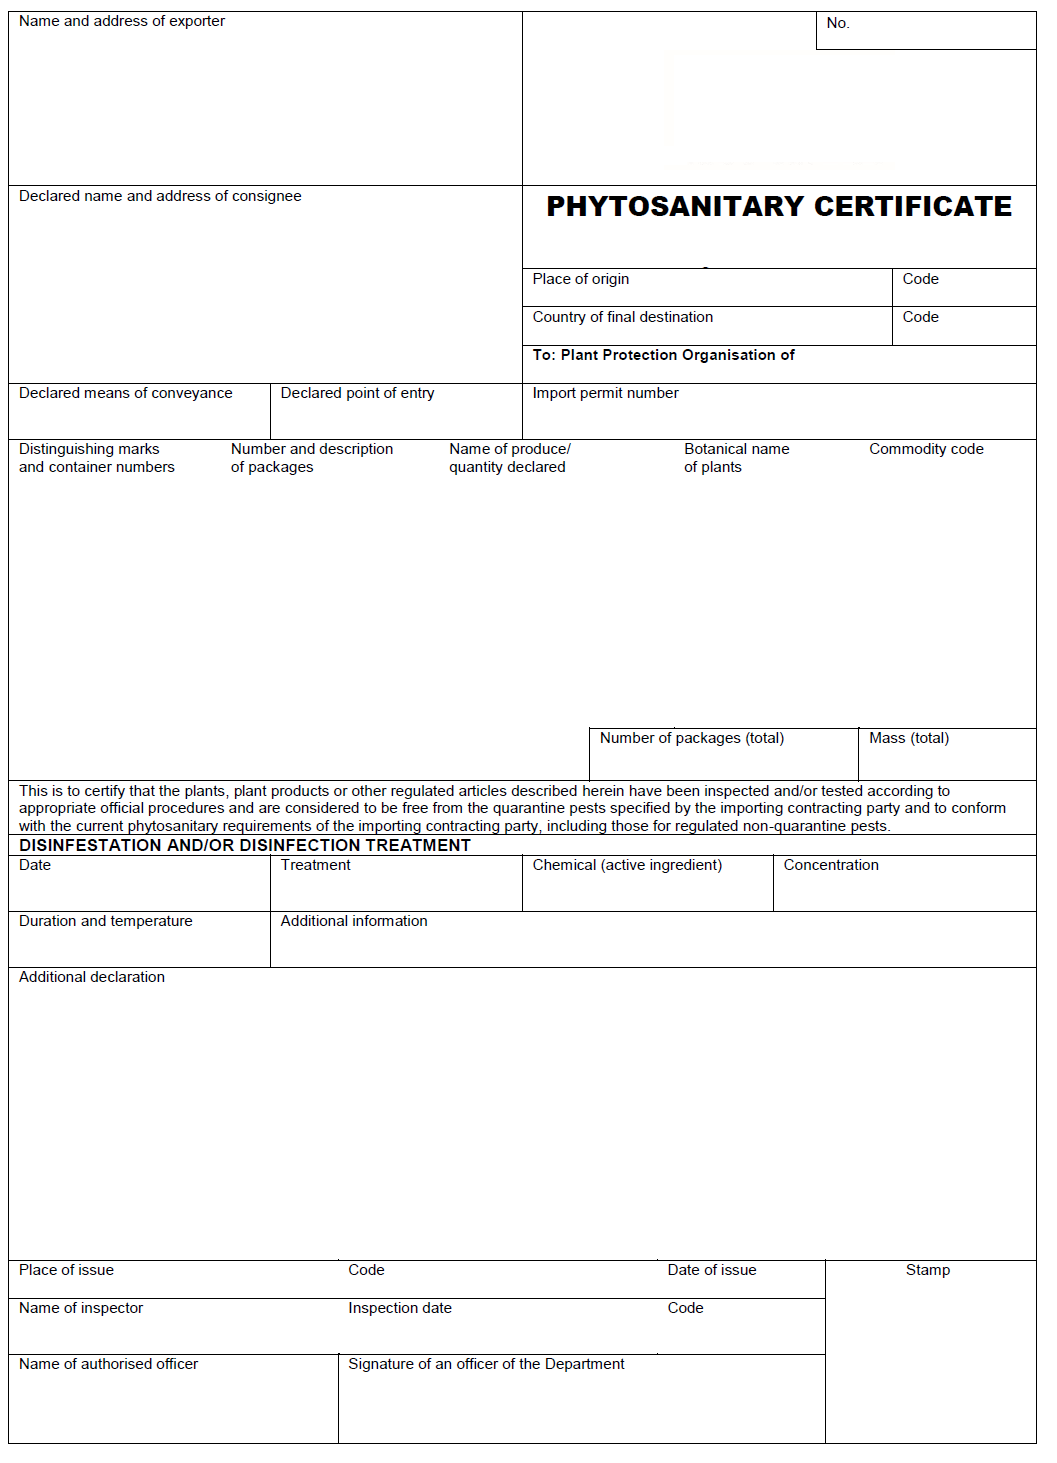 Phytosanitary Certificate Sample